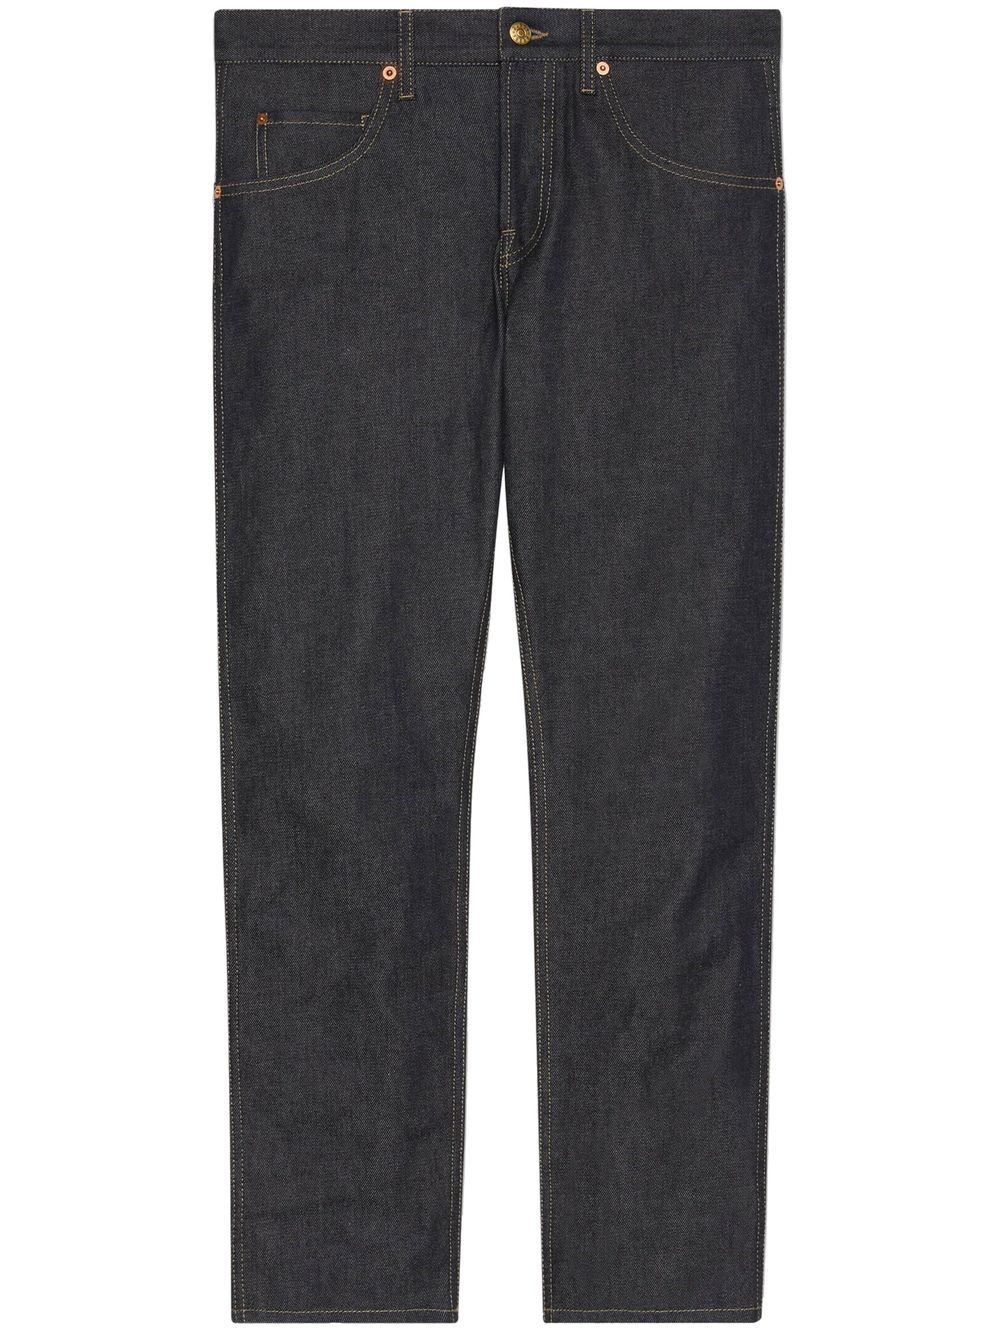 Gucci Jeans for Men, Denim Shorts